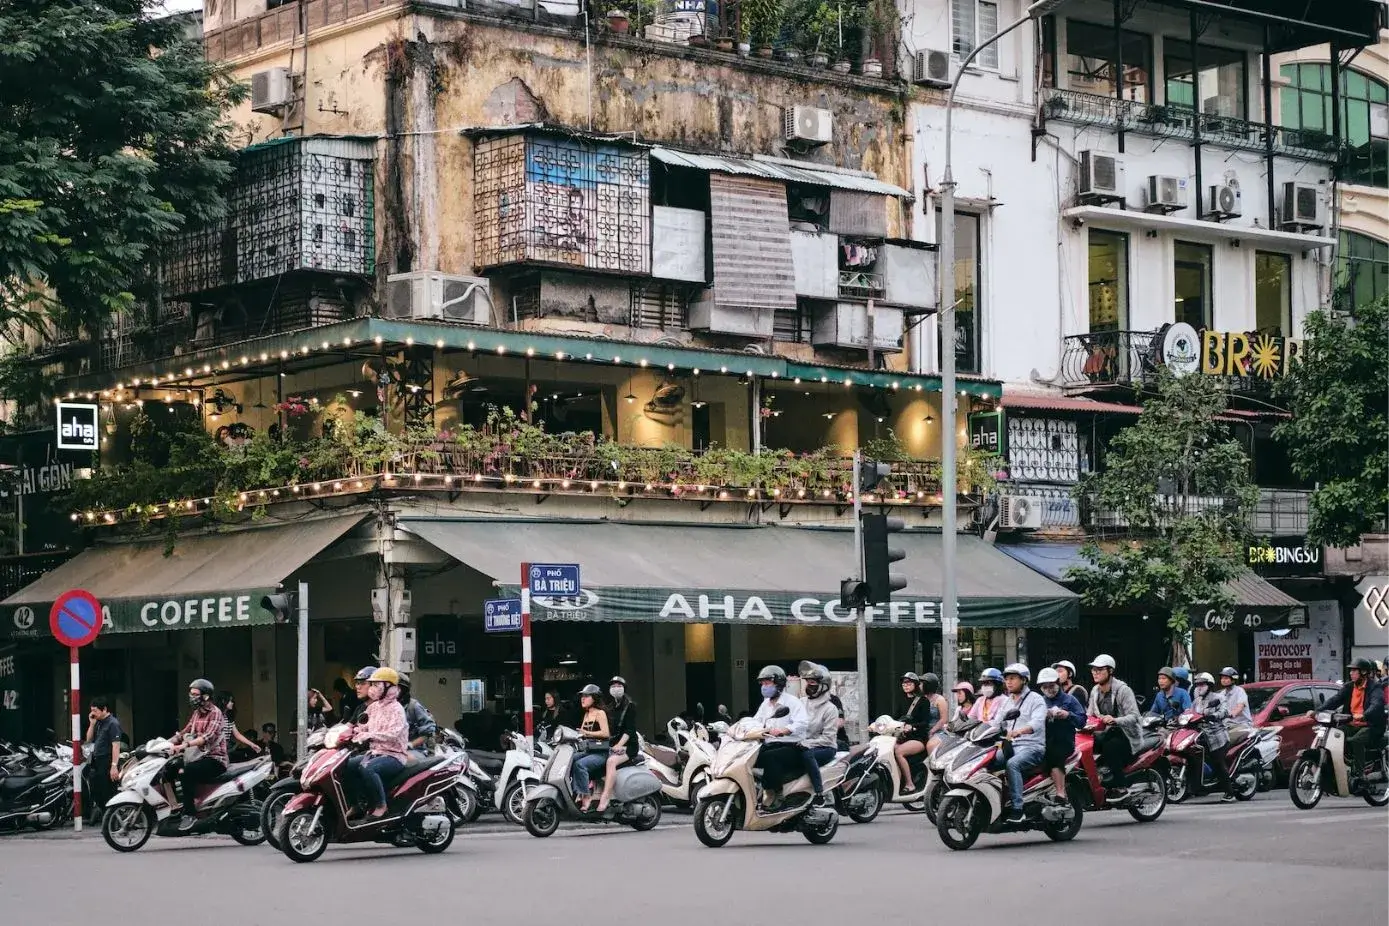 13 Best Things to Do in Vietnam - Explore Vietnam on Motorbike